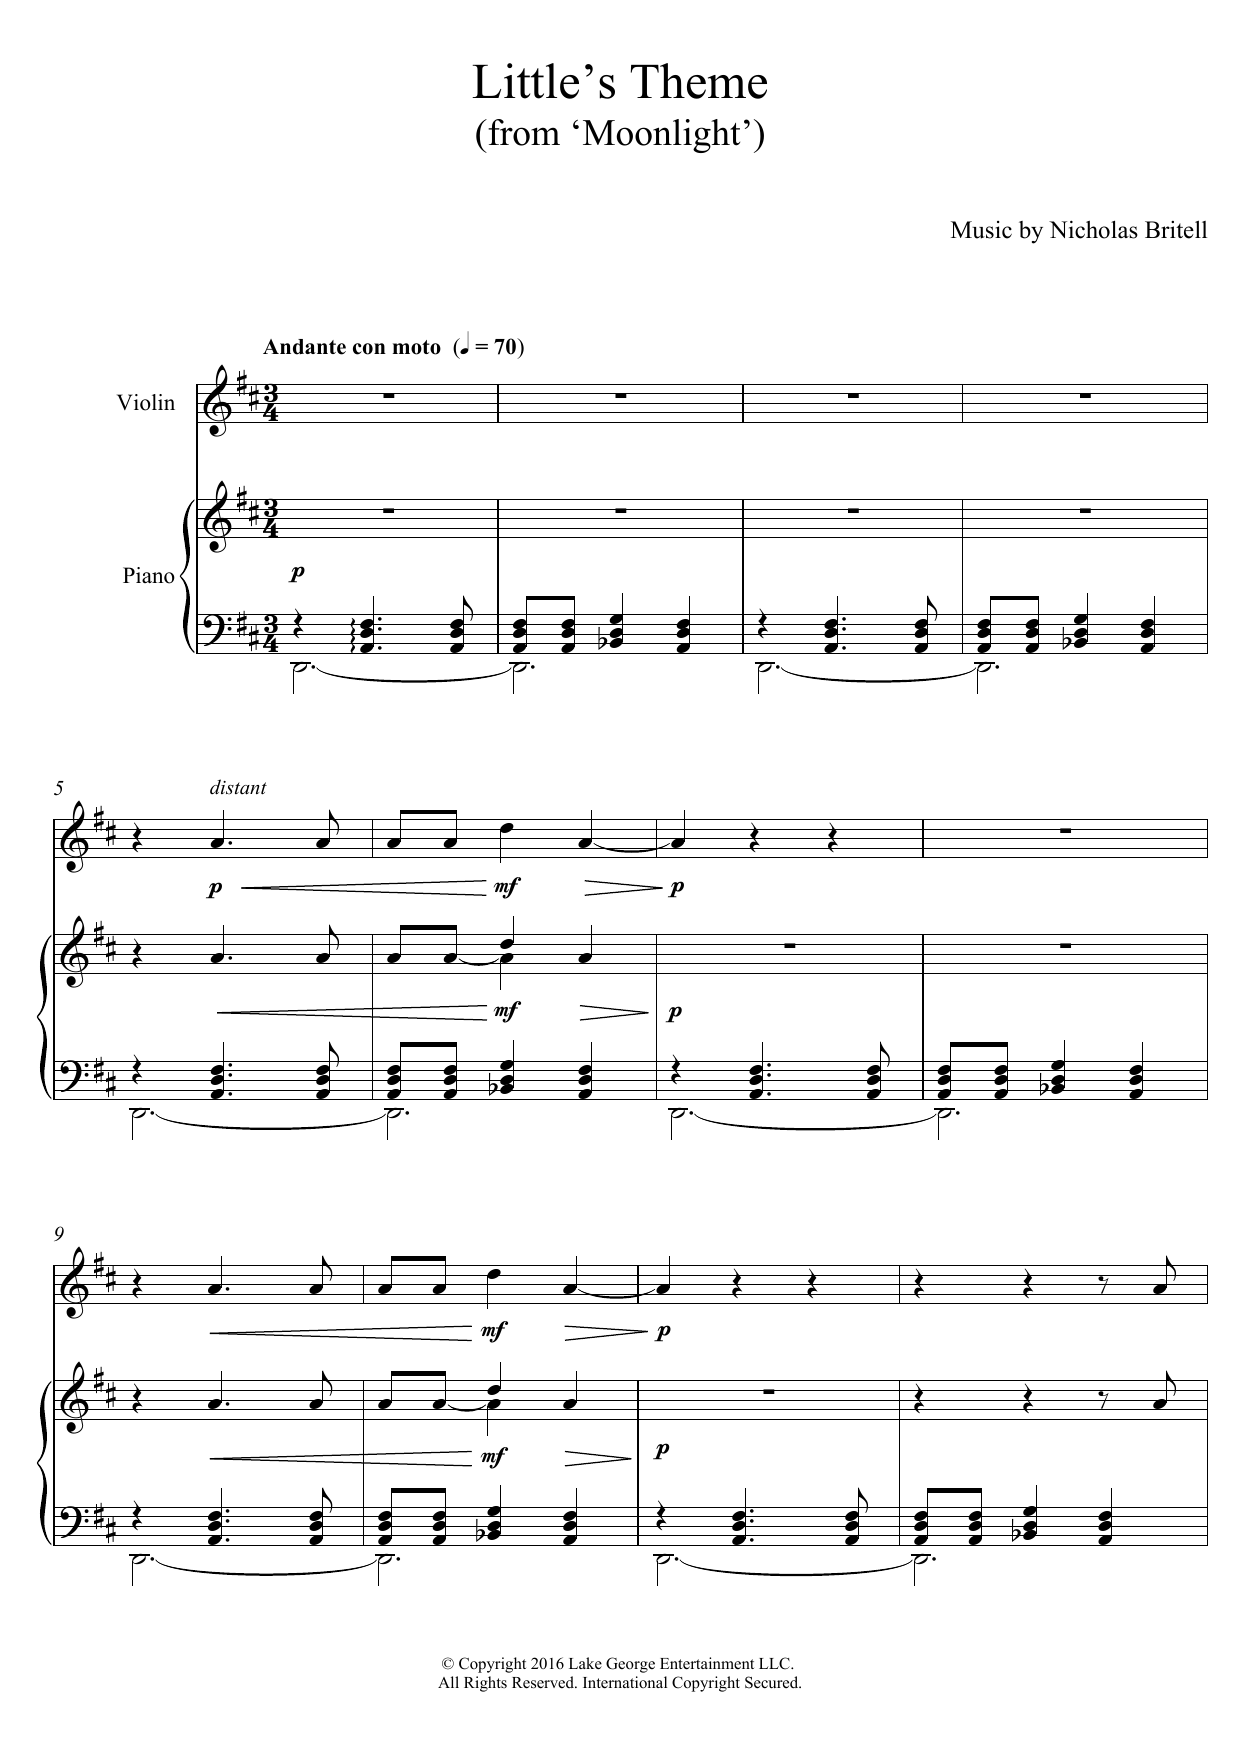 Download Nicholas Britell Little's Theme (from 'Moonlight') Sheet Music